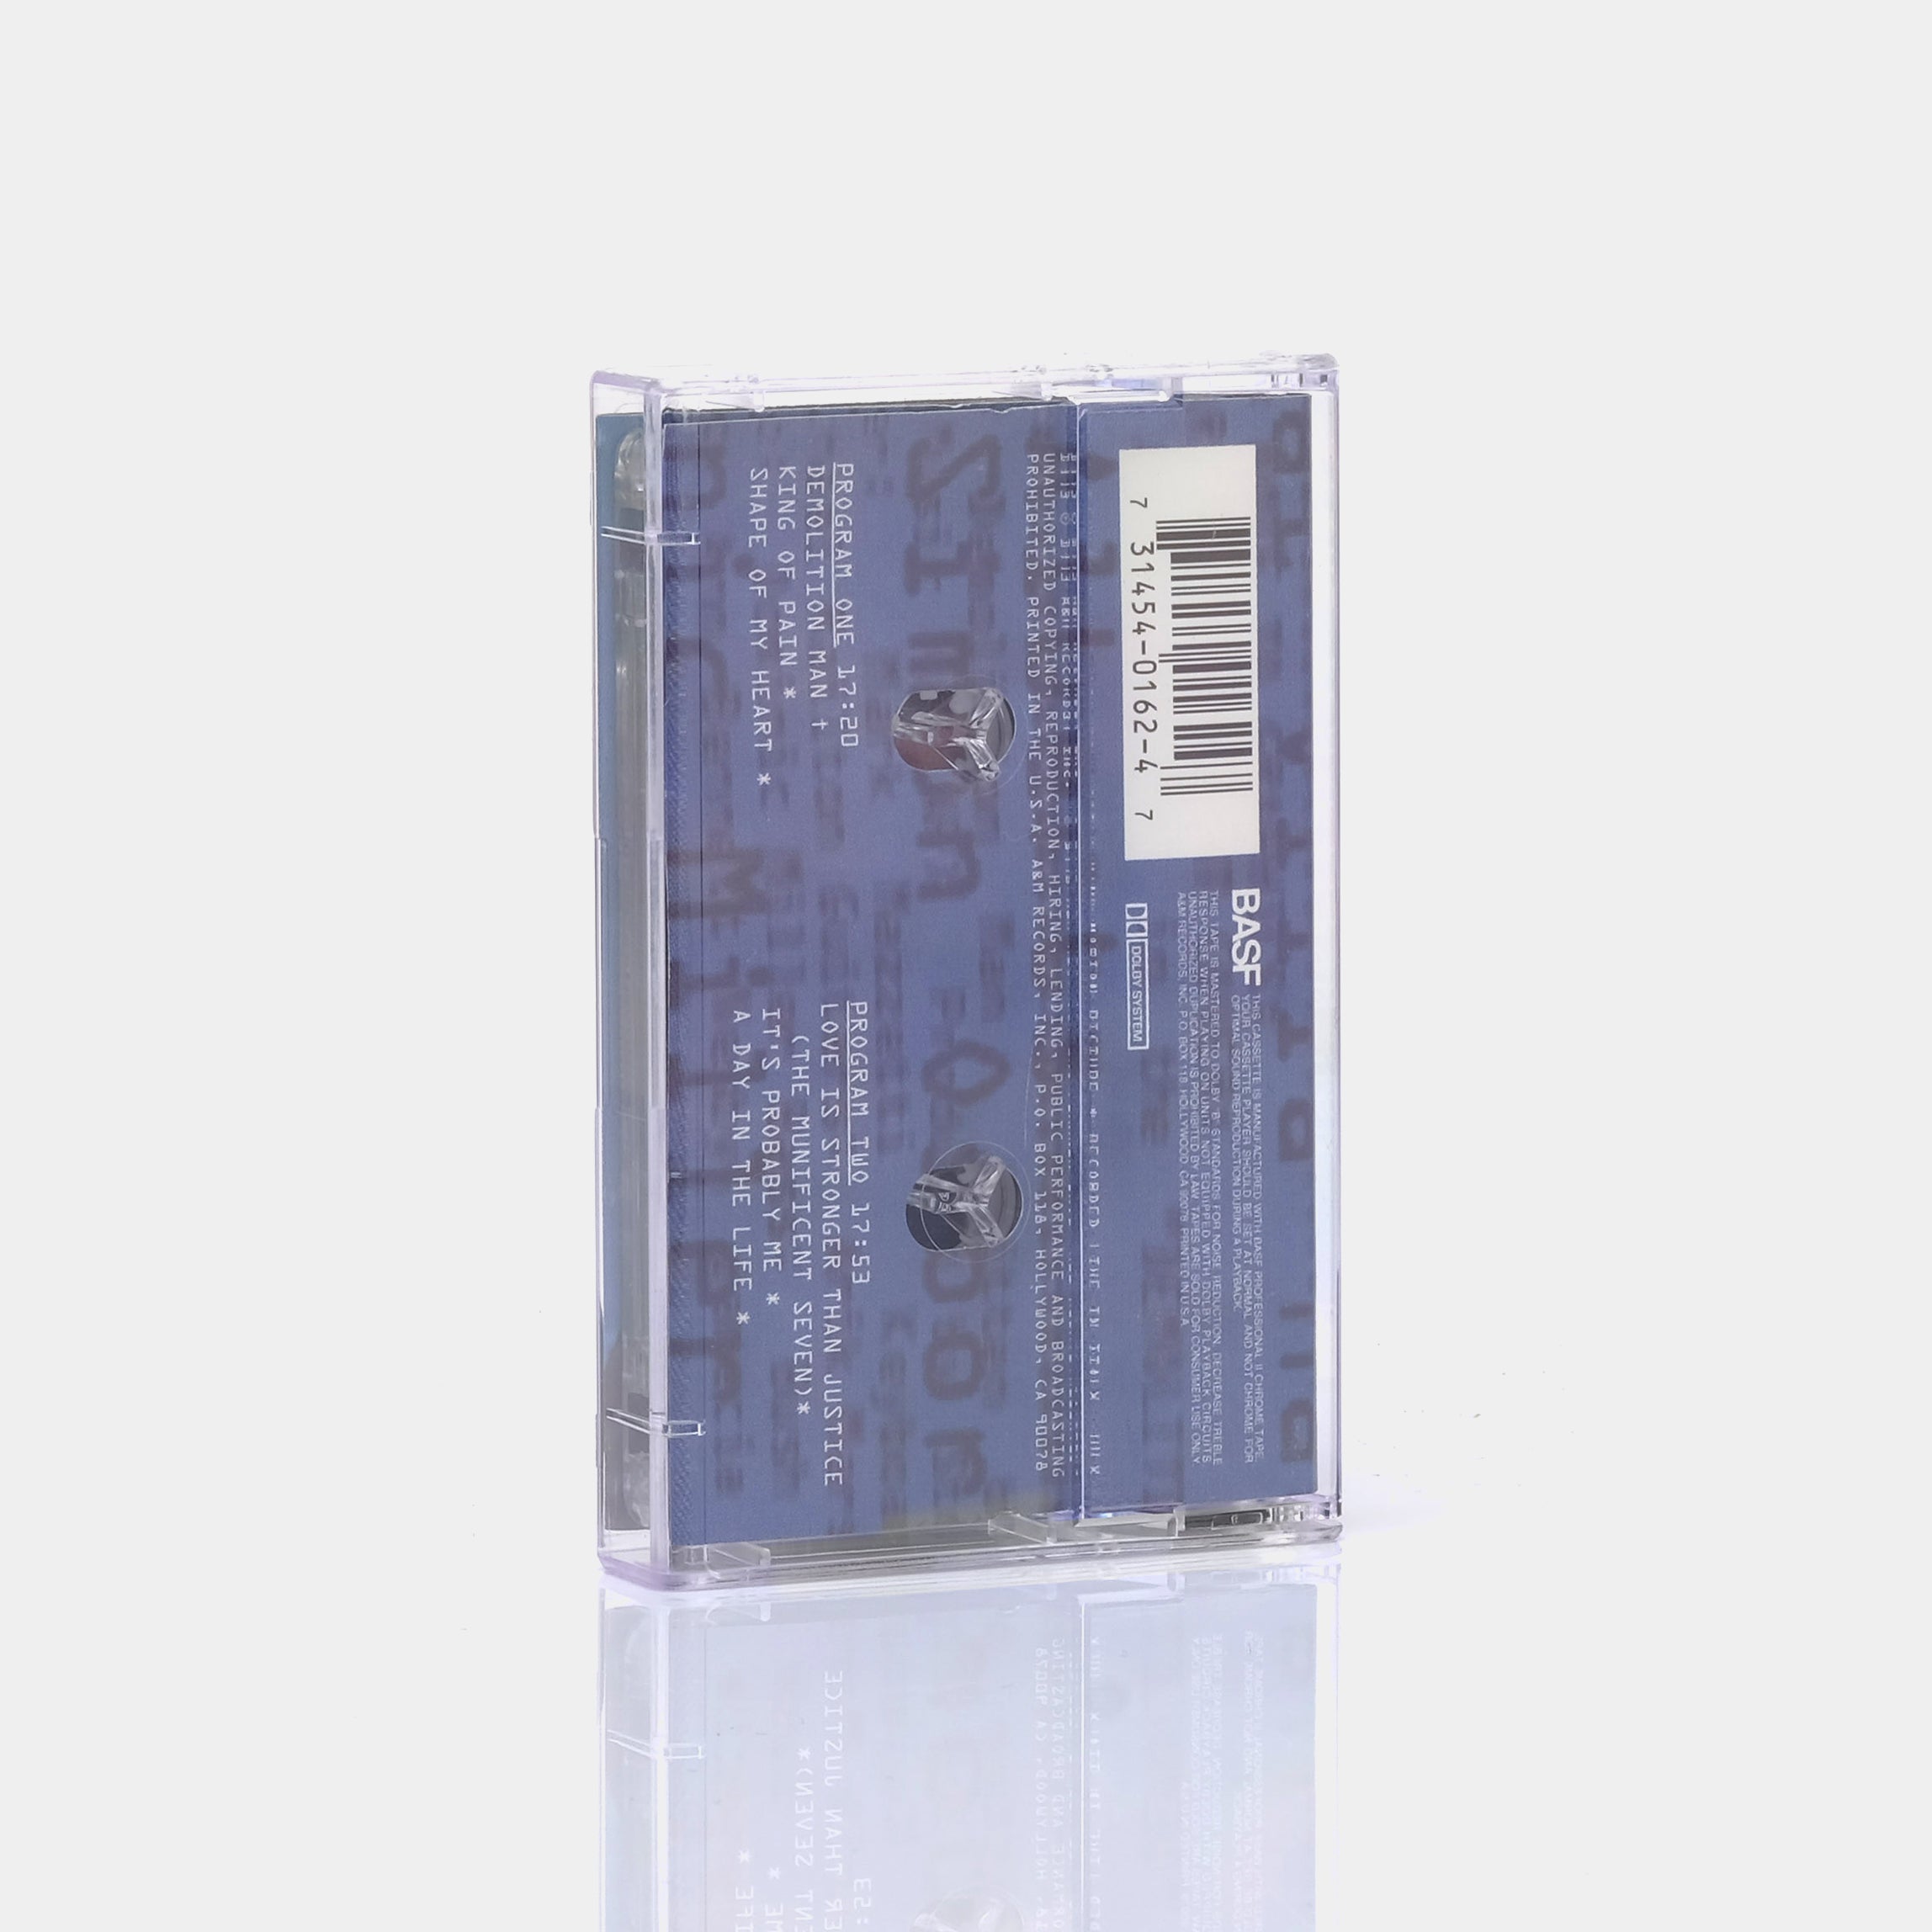 Sting - Demolition Man Cassette Tape